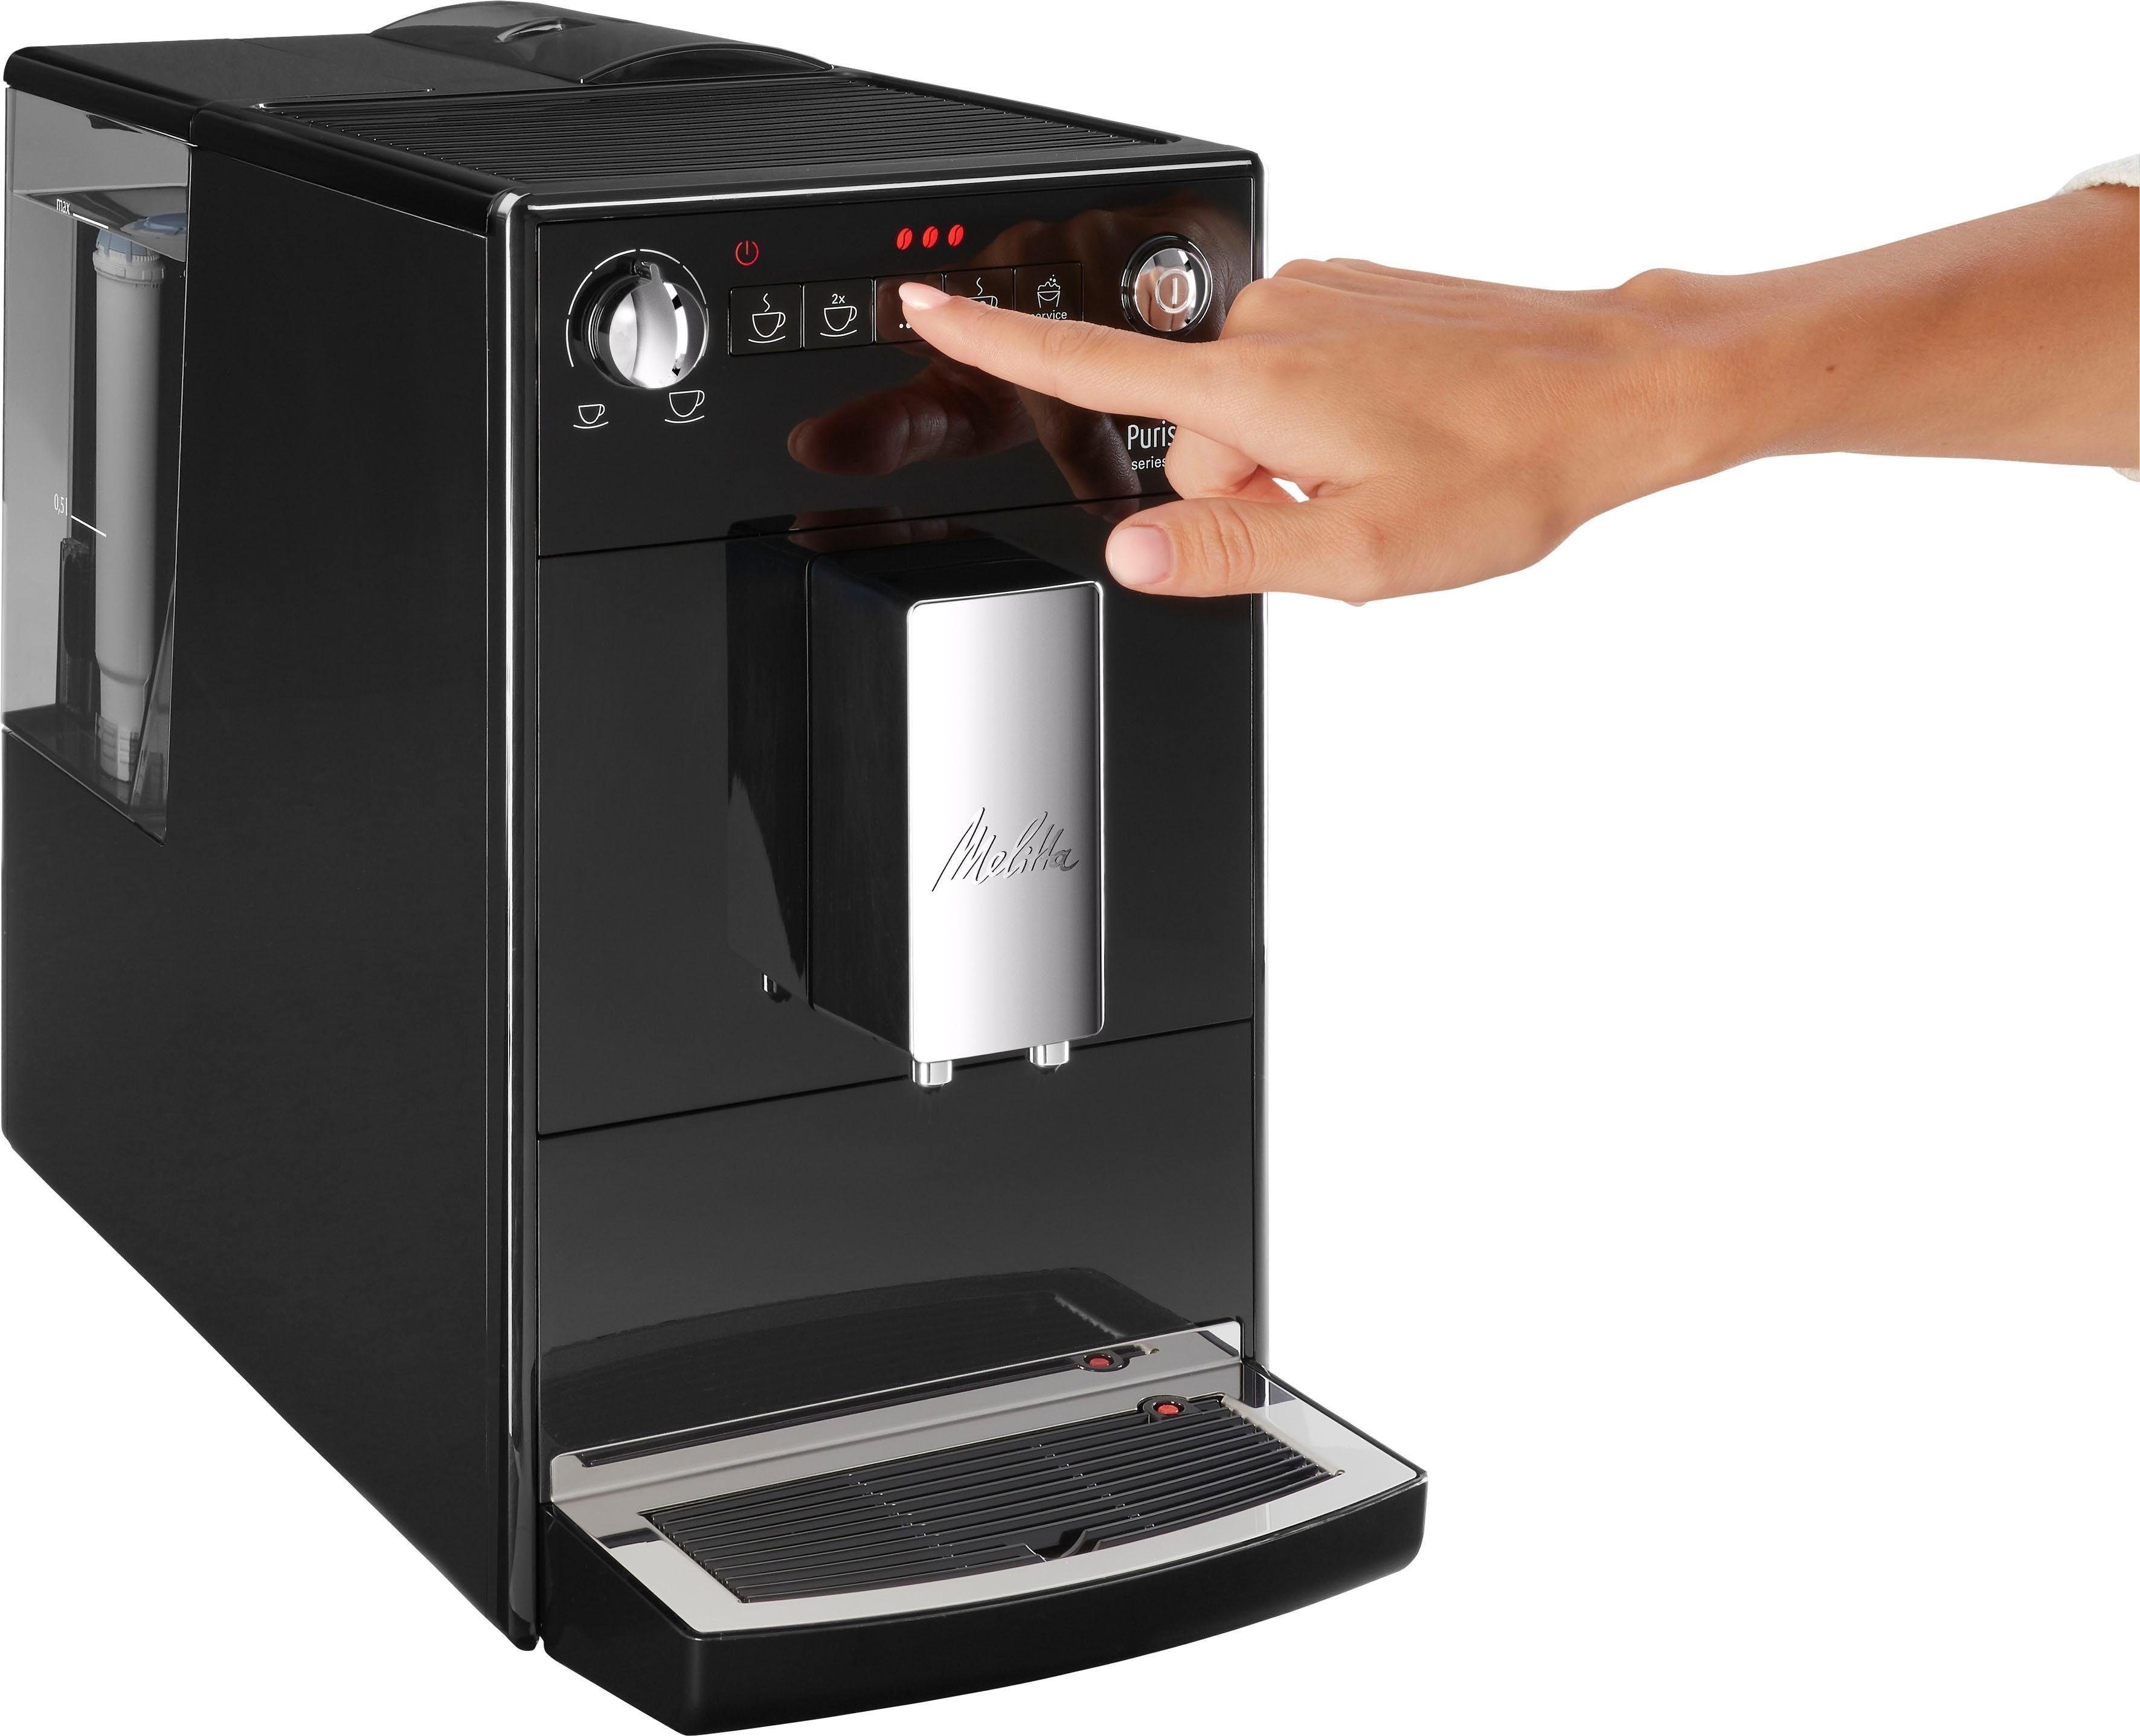 kompakt Purista® & leise Kaffeevollautomat Lieblingskaffee-Funktion, Melitta extra F230-102, schwarz,